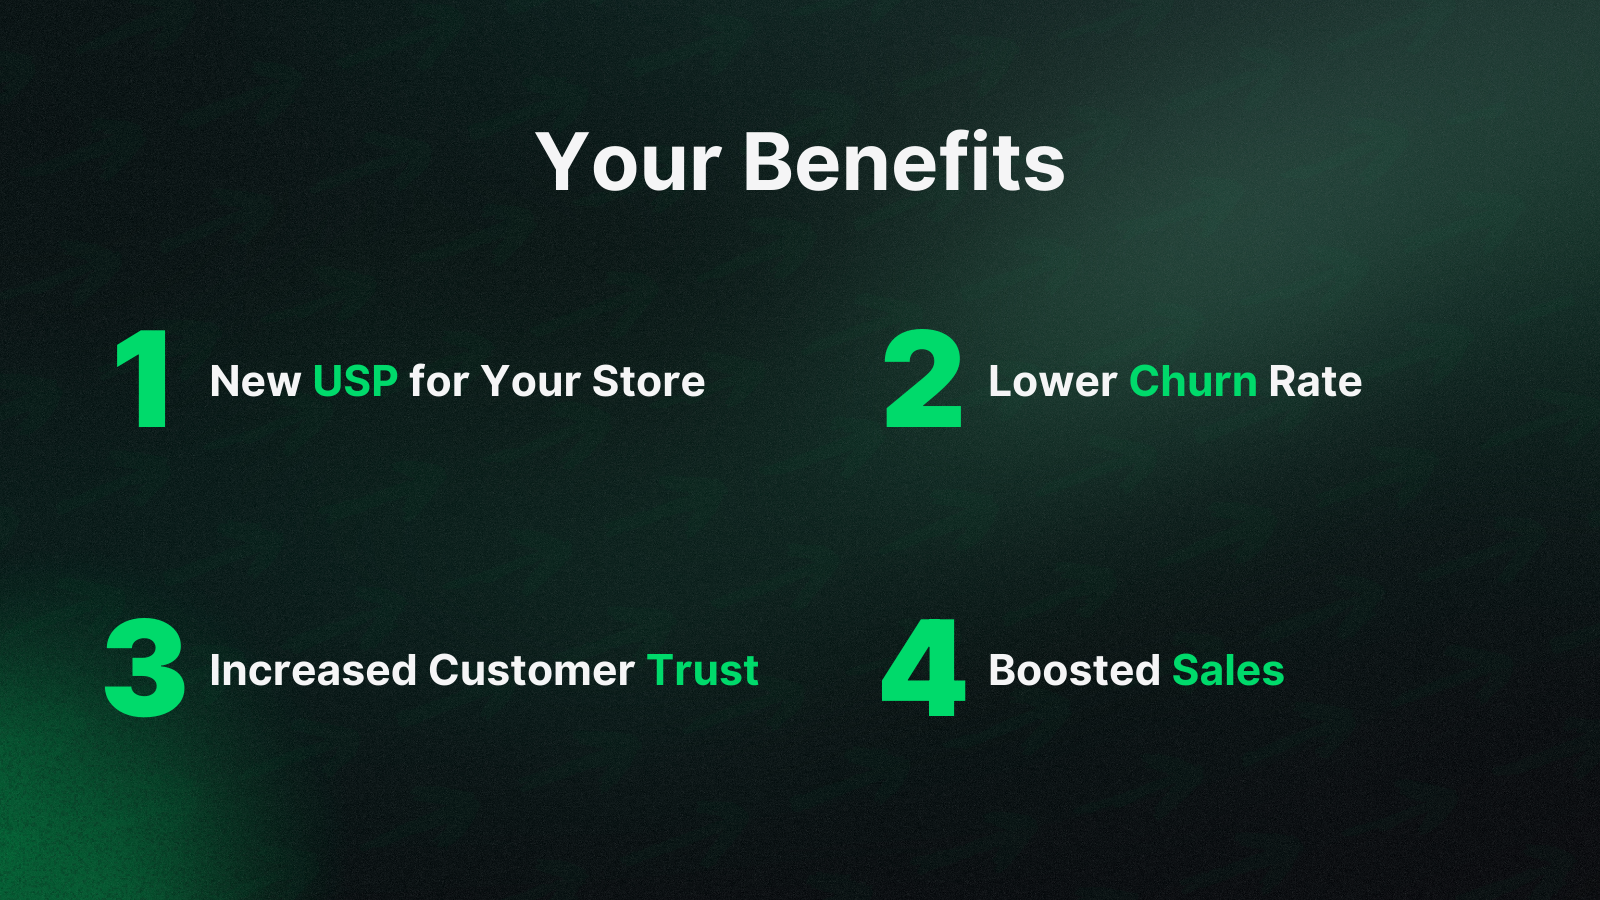 Lower churn rate, increase customer trust, & boost sales